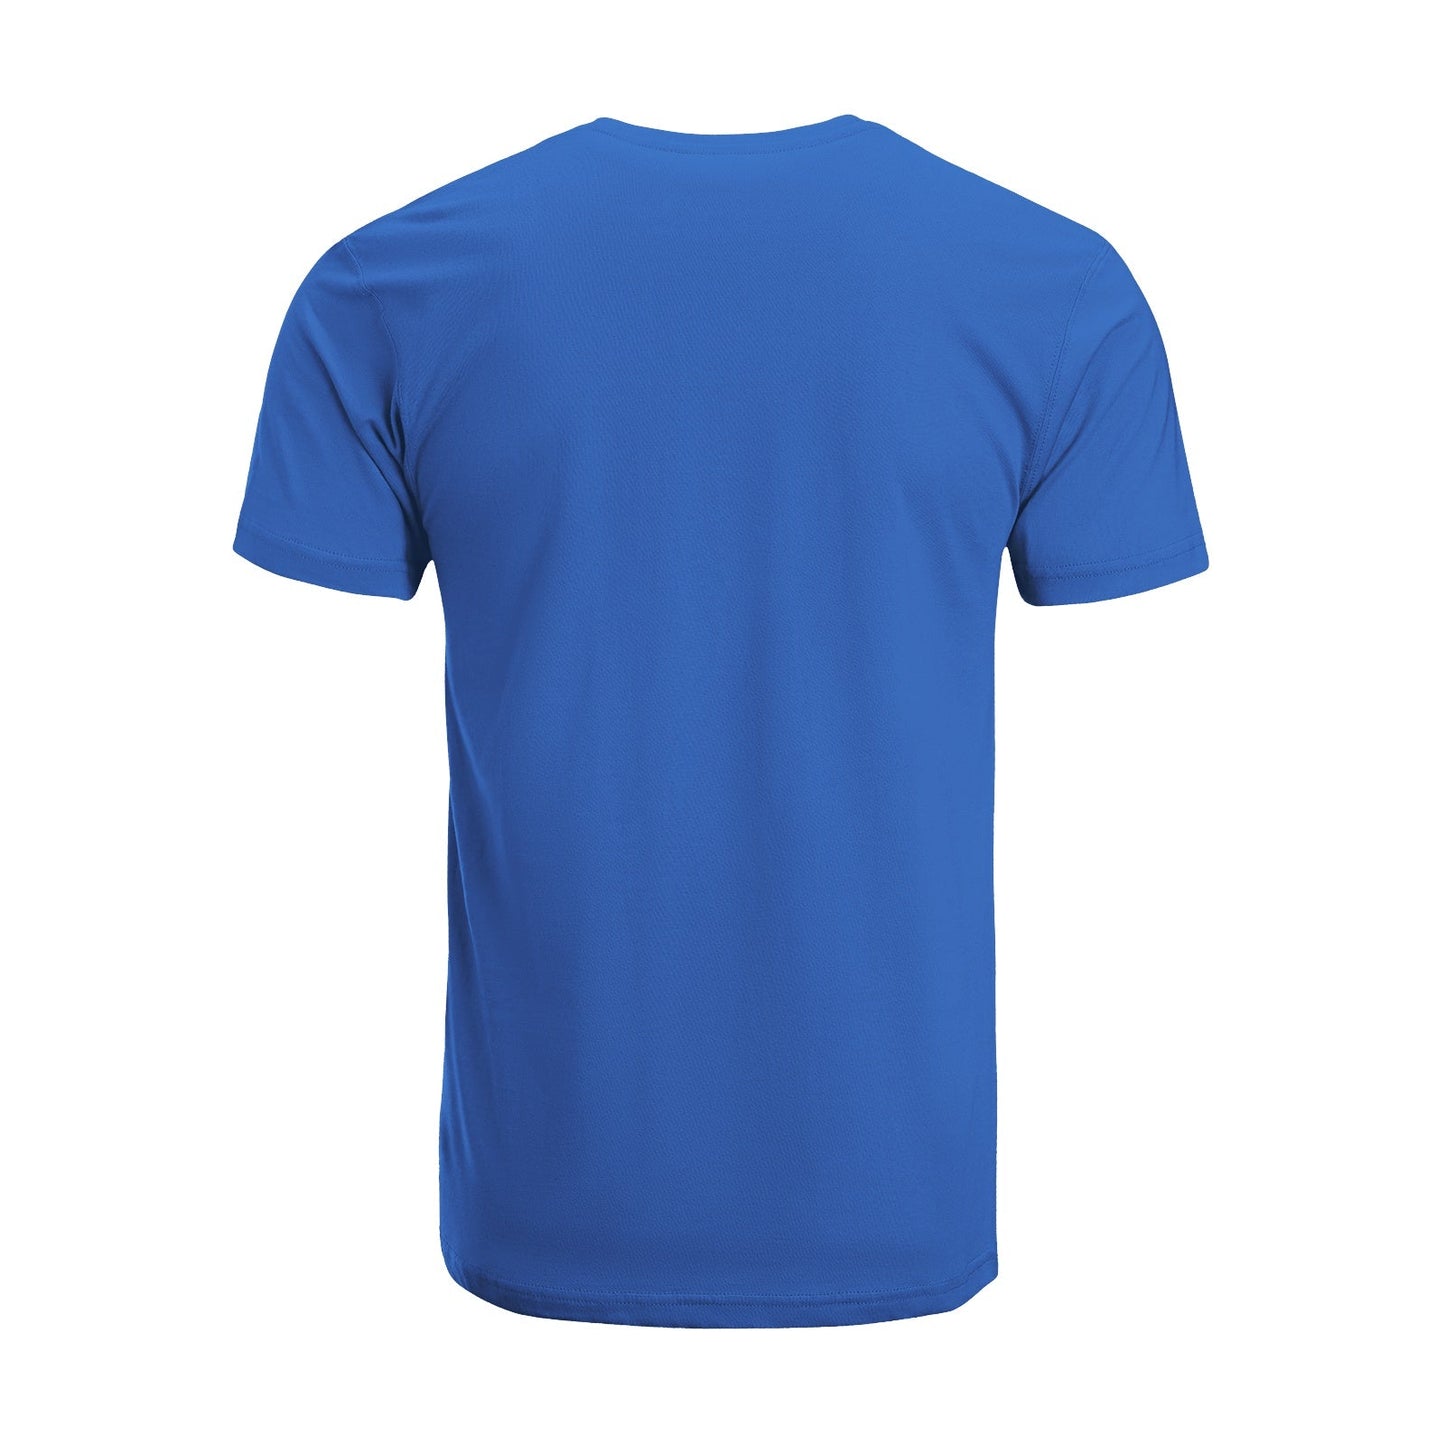 Unisex Short Sleeve Crew Neck Cotton Jersey T-Shirt Gym No. 46 - Tara-Outfits.com